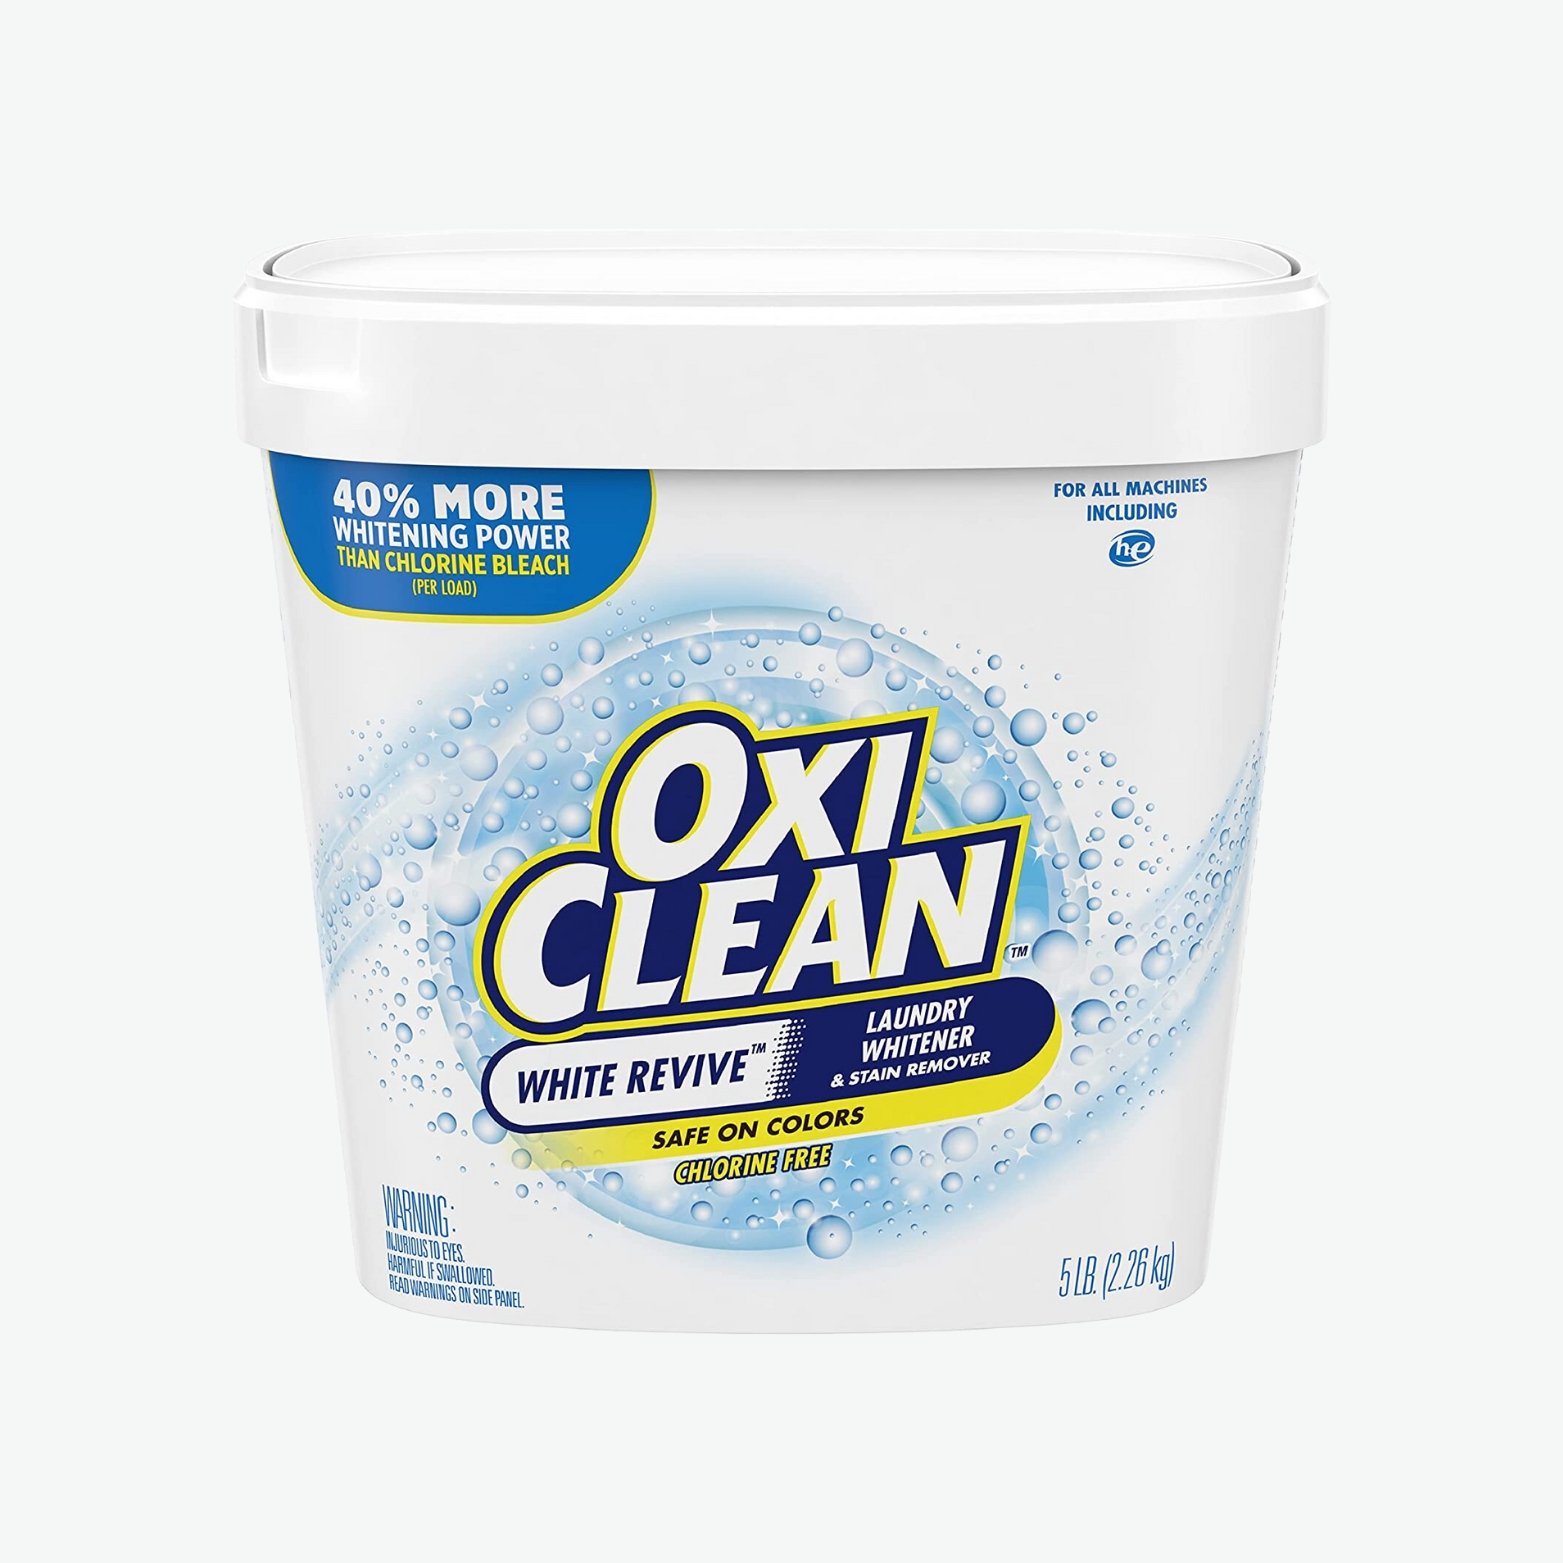 Oxi Clean Laundry Whitener.jpg